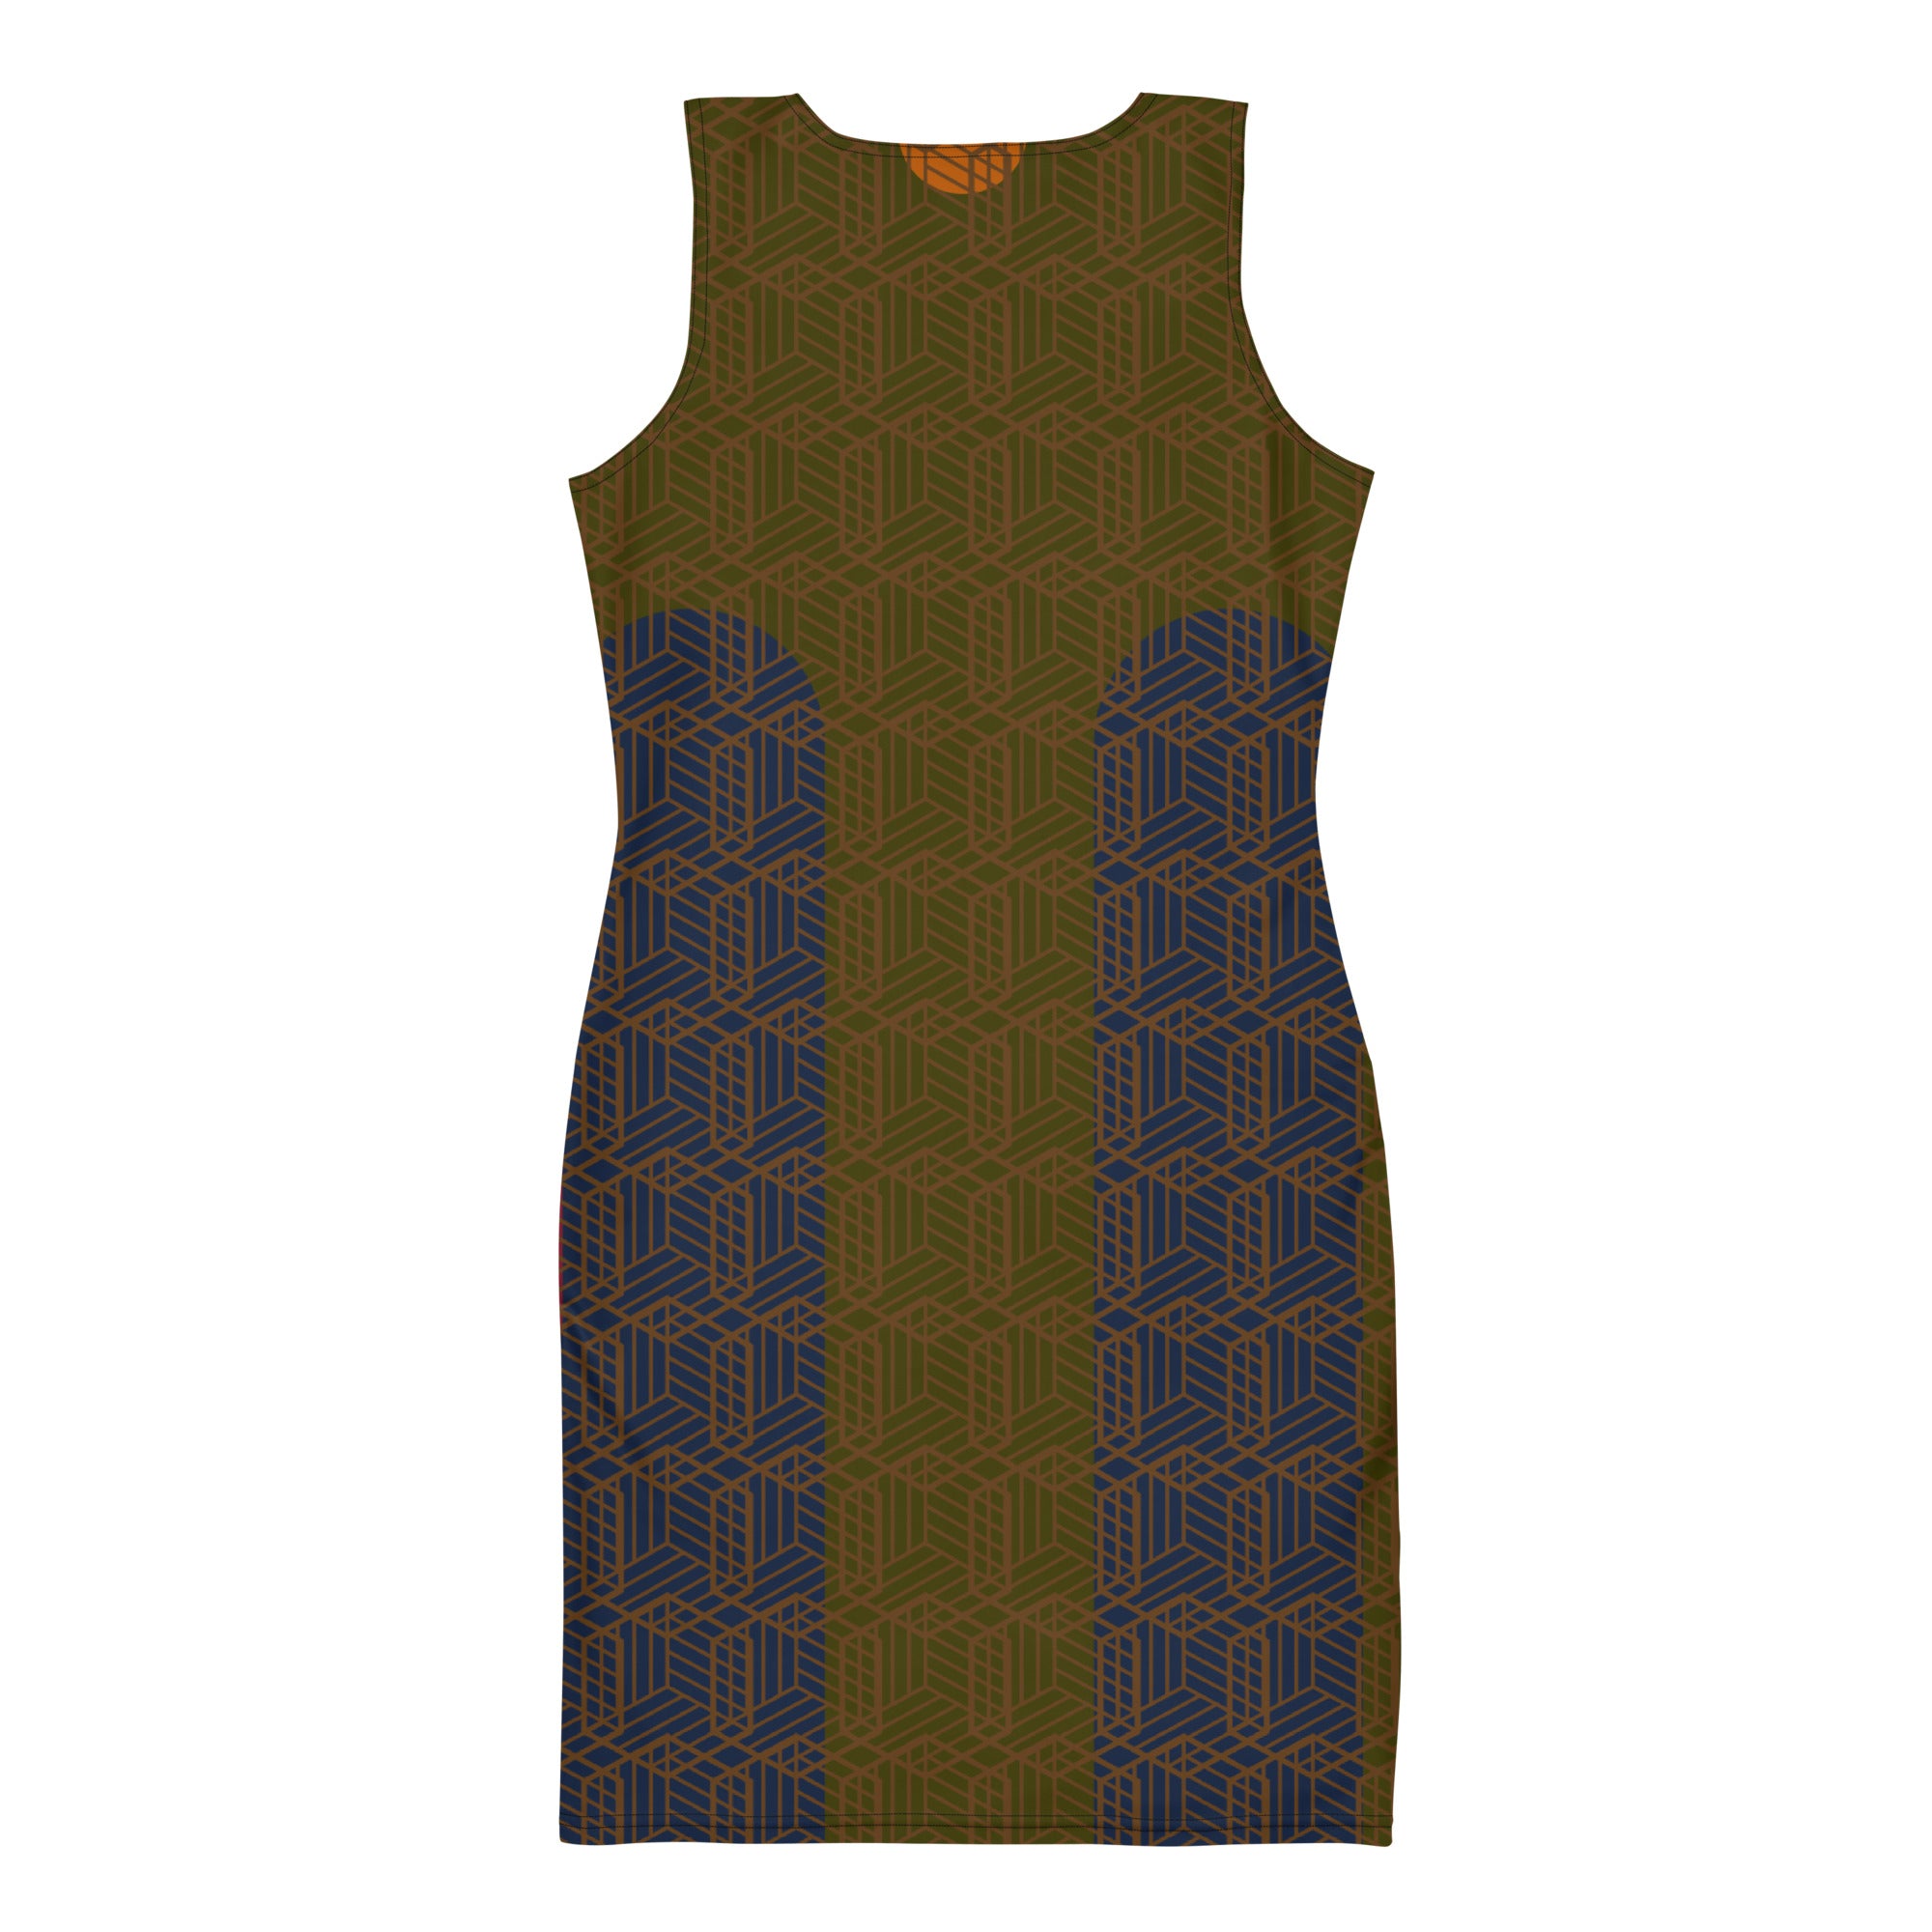 Dahomey Sublimation Dress